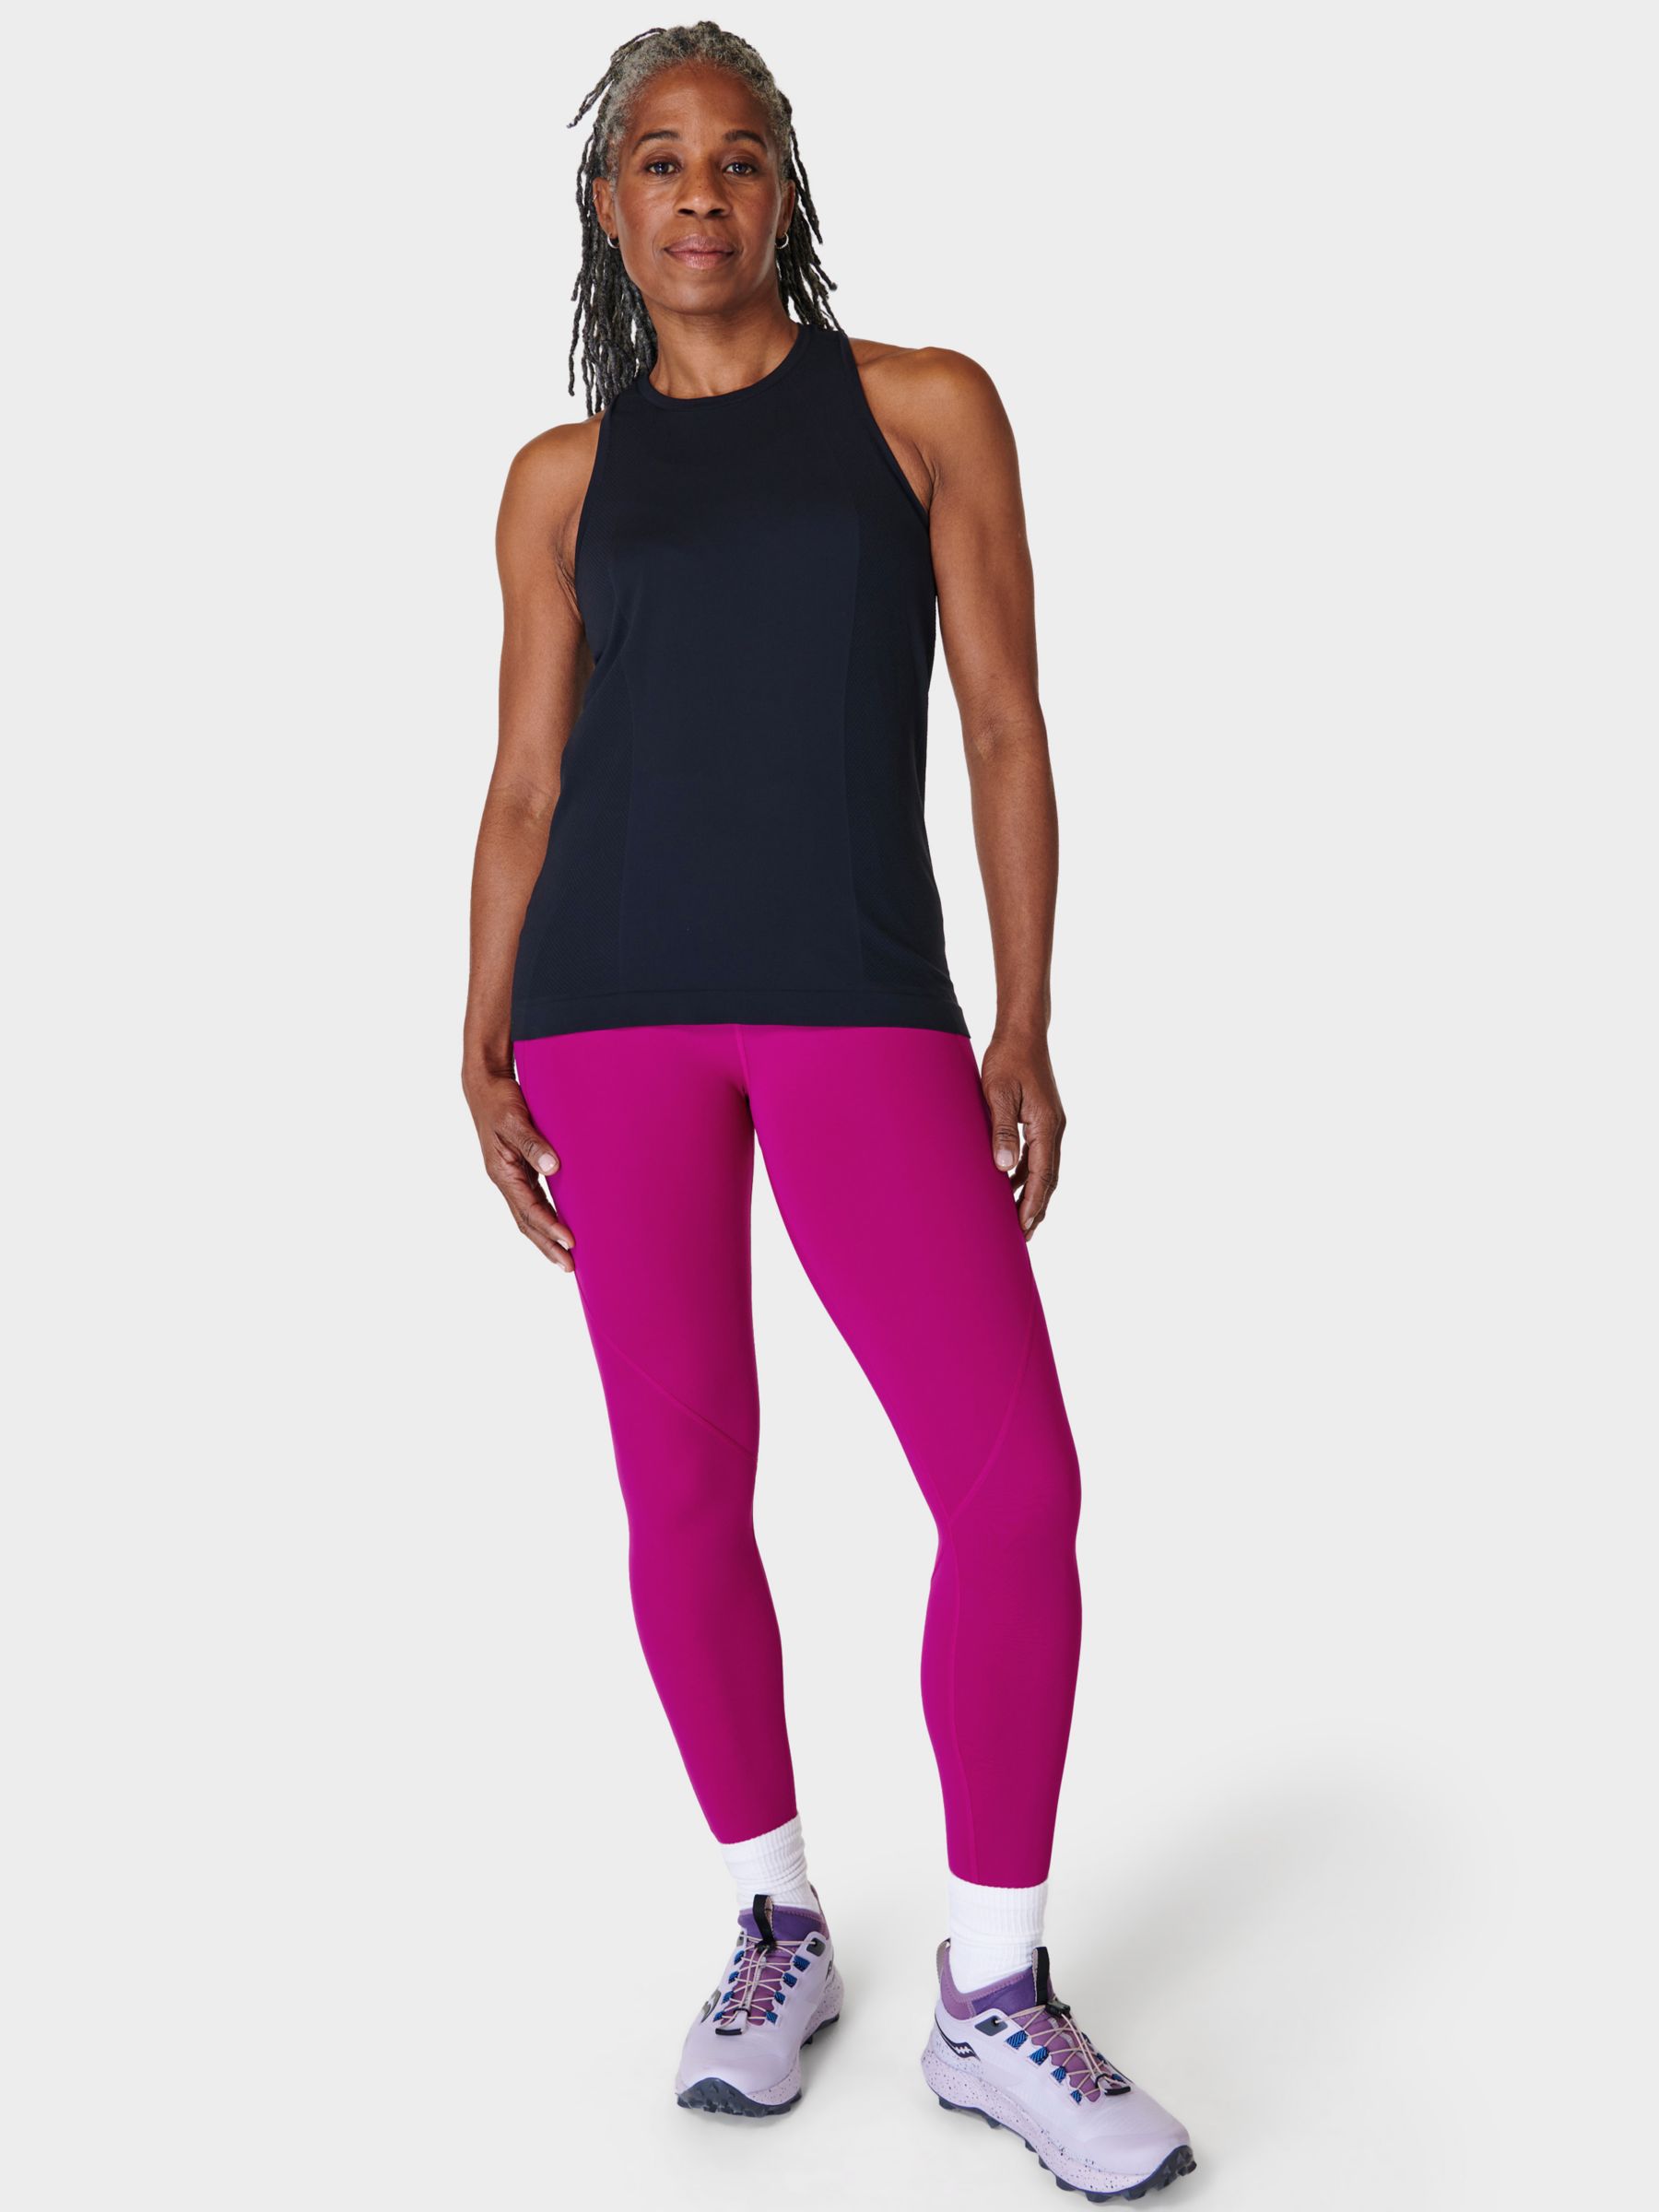 Sweaty Betty Athlete Seamless Gym Vest, Black, XS-S